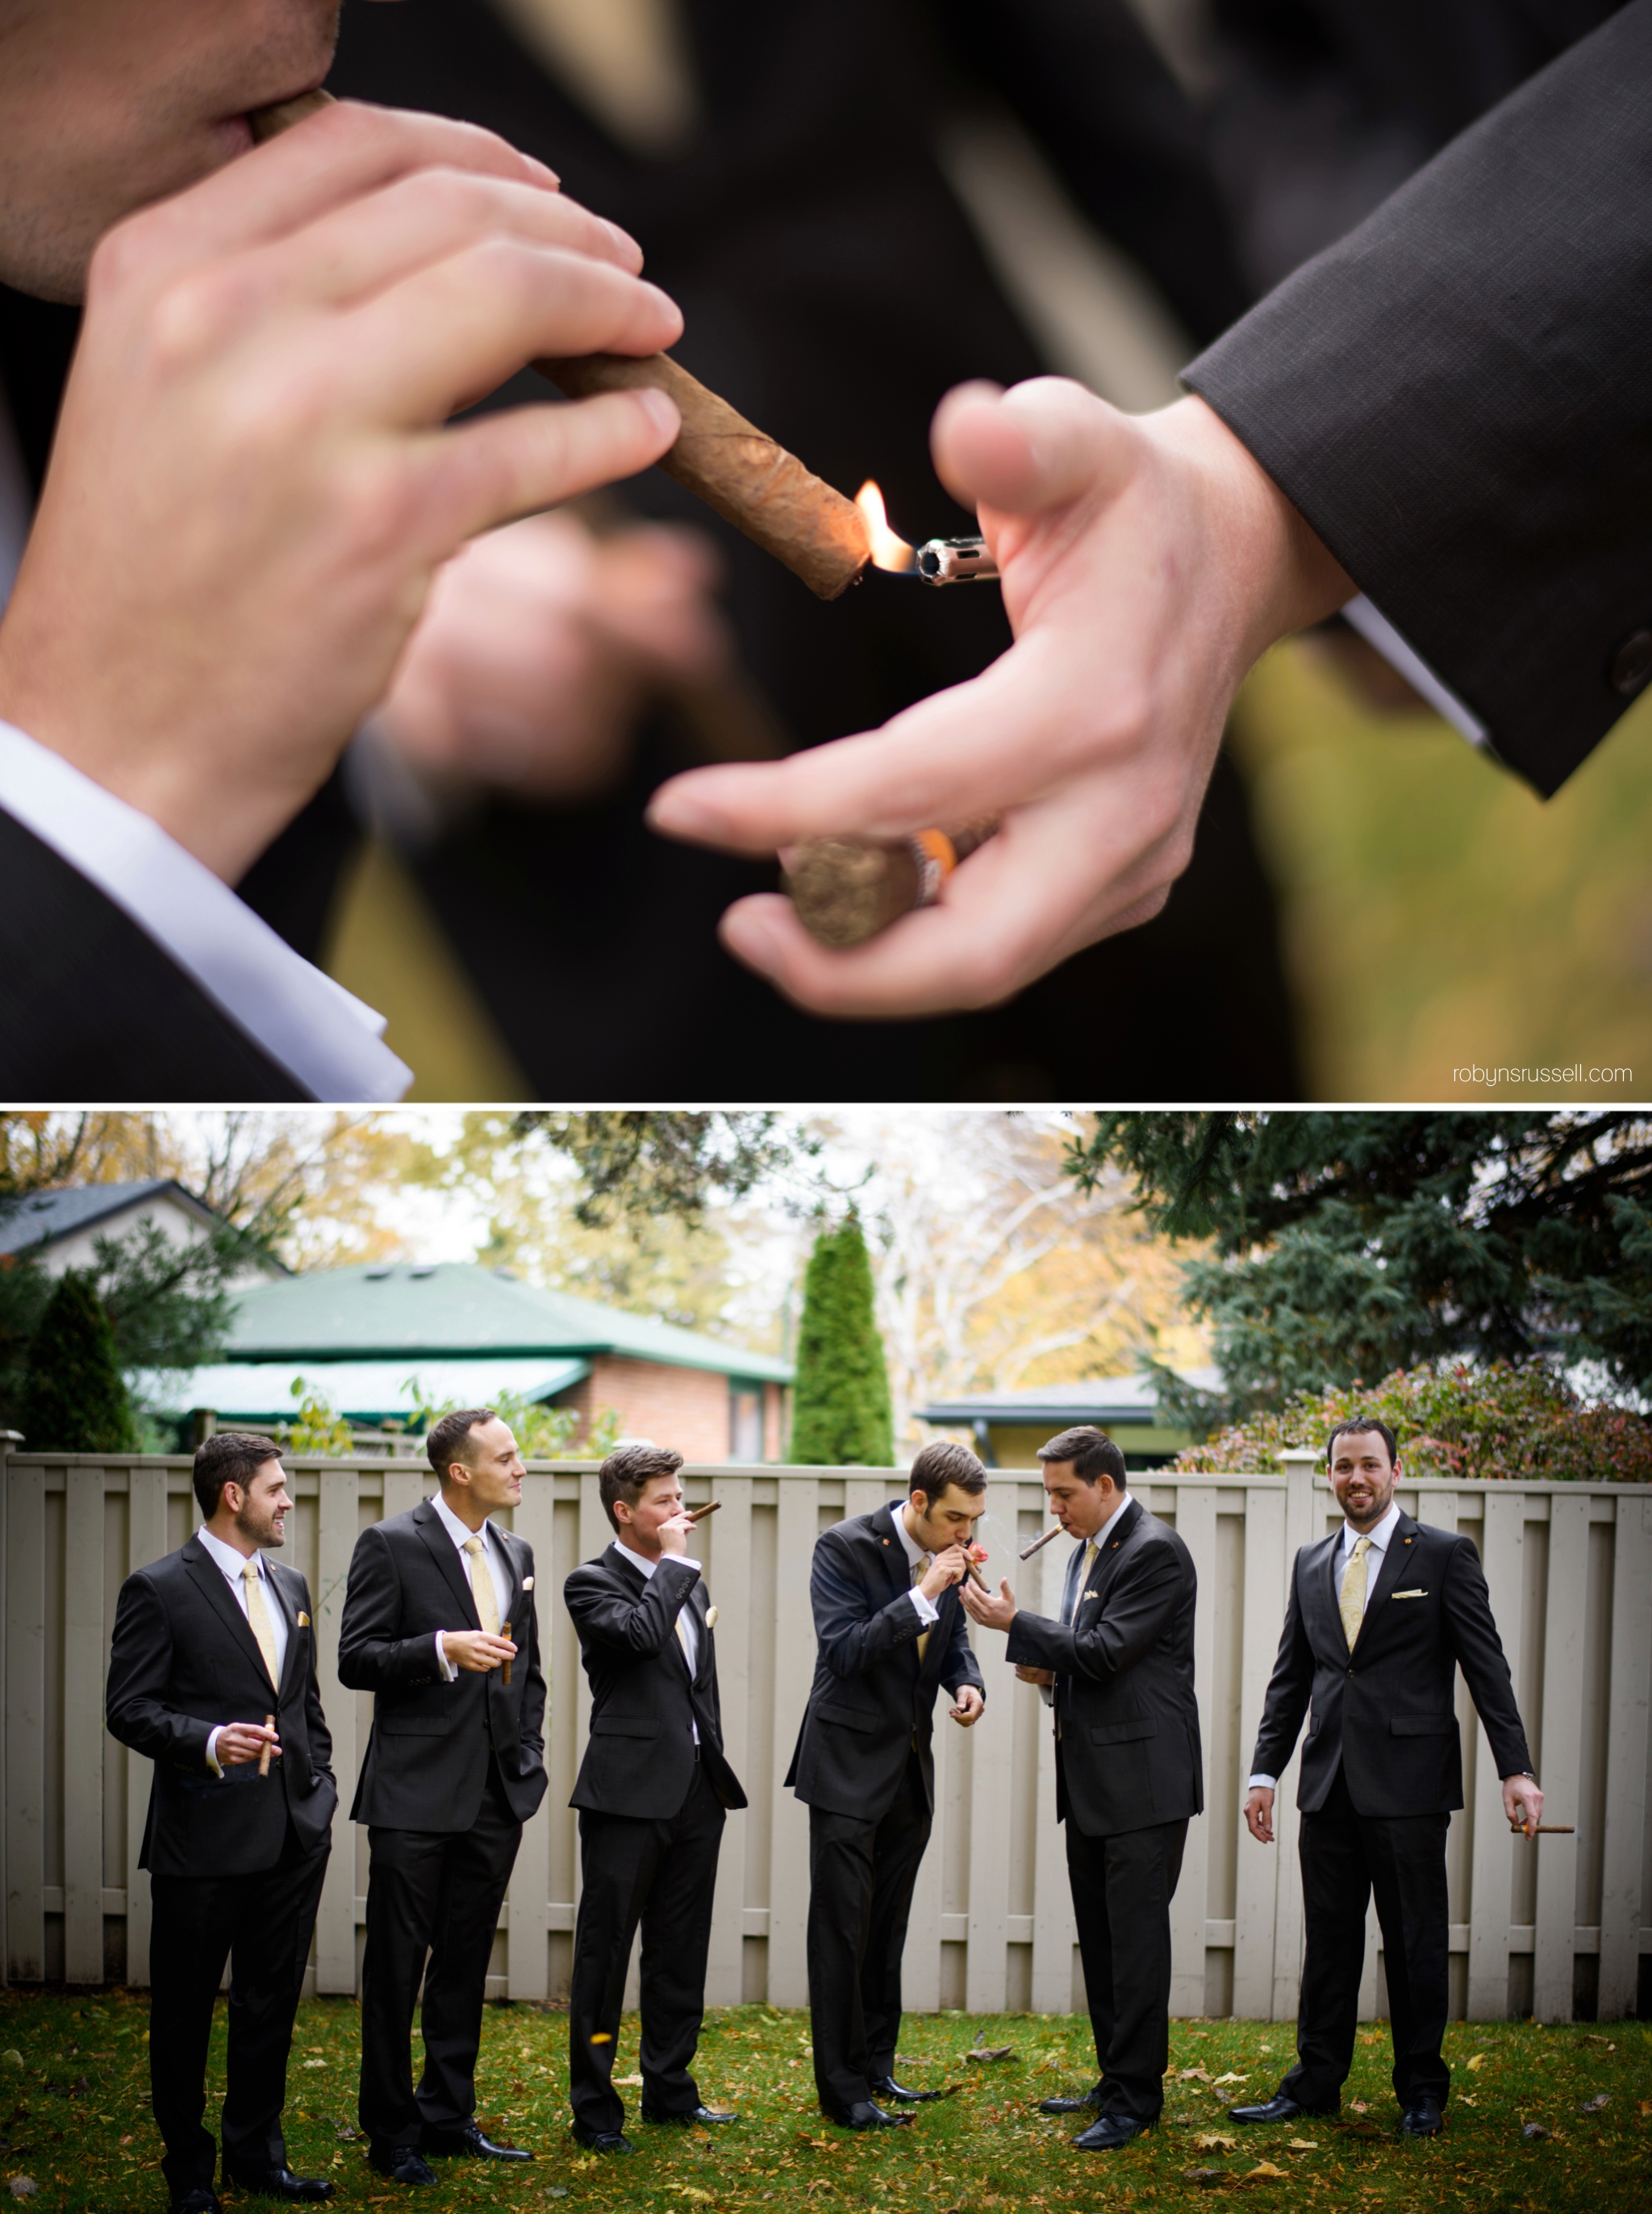 3-groom-and-friends-smoking-cigars-on-wedding-day.jpg